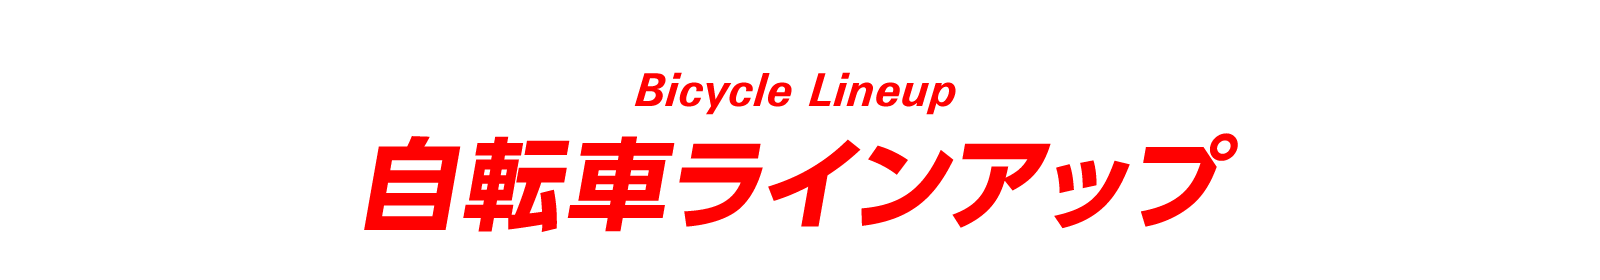 Bicycle Lineup 自転車ラインアップ